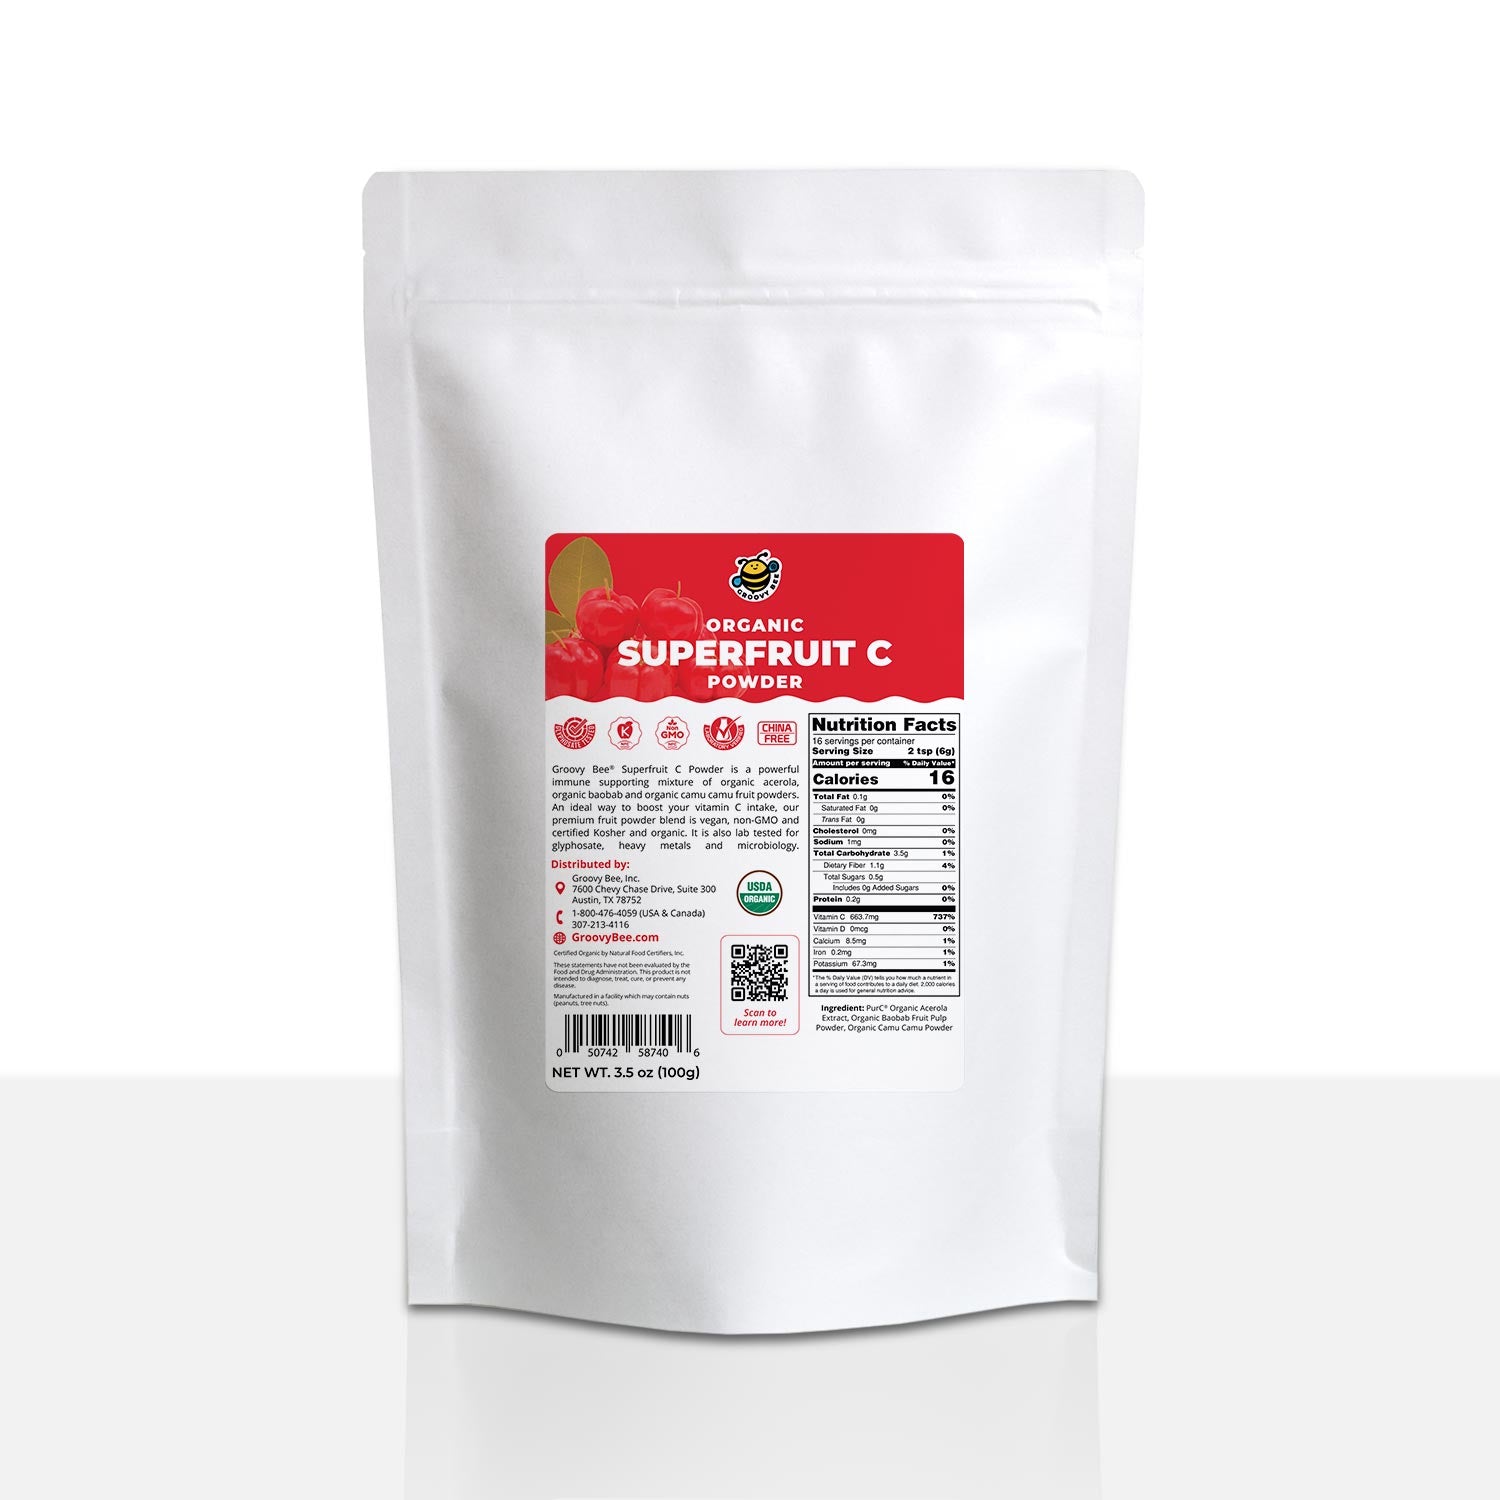 Organic Superfruit C Powder 3.5 oz (100g) (6-Pack)